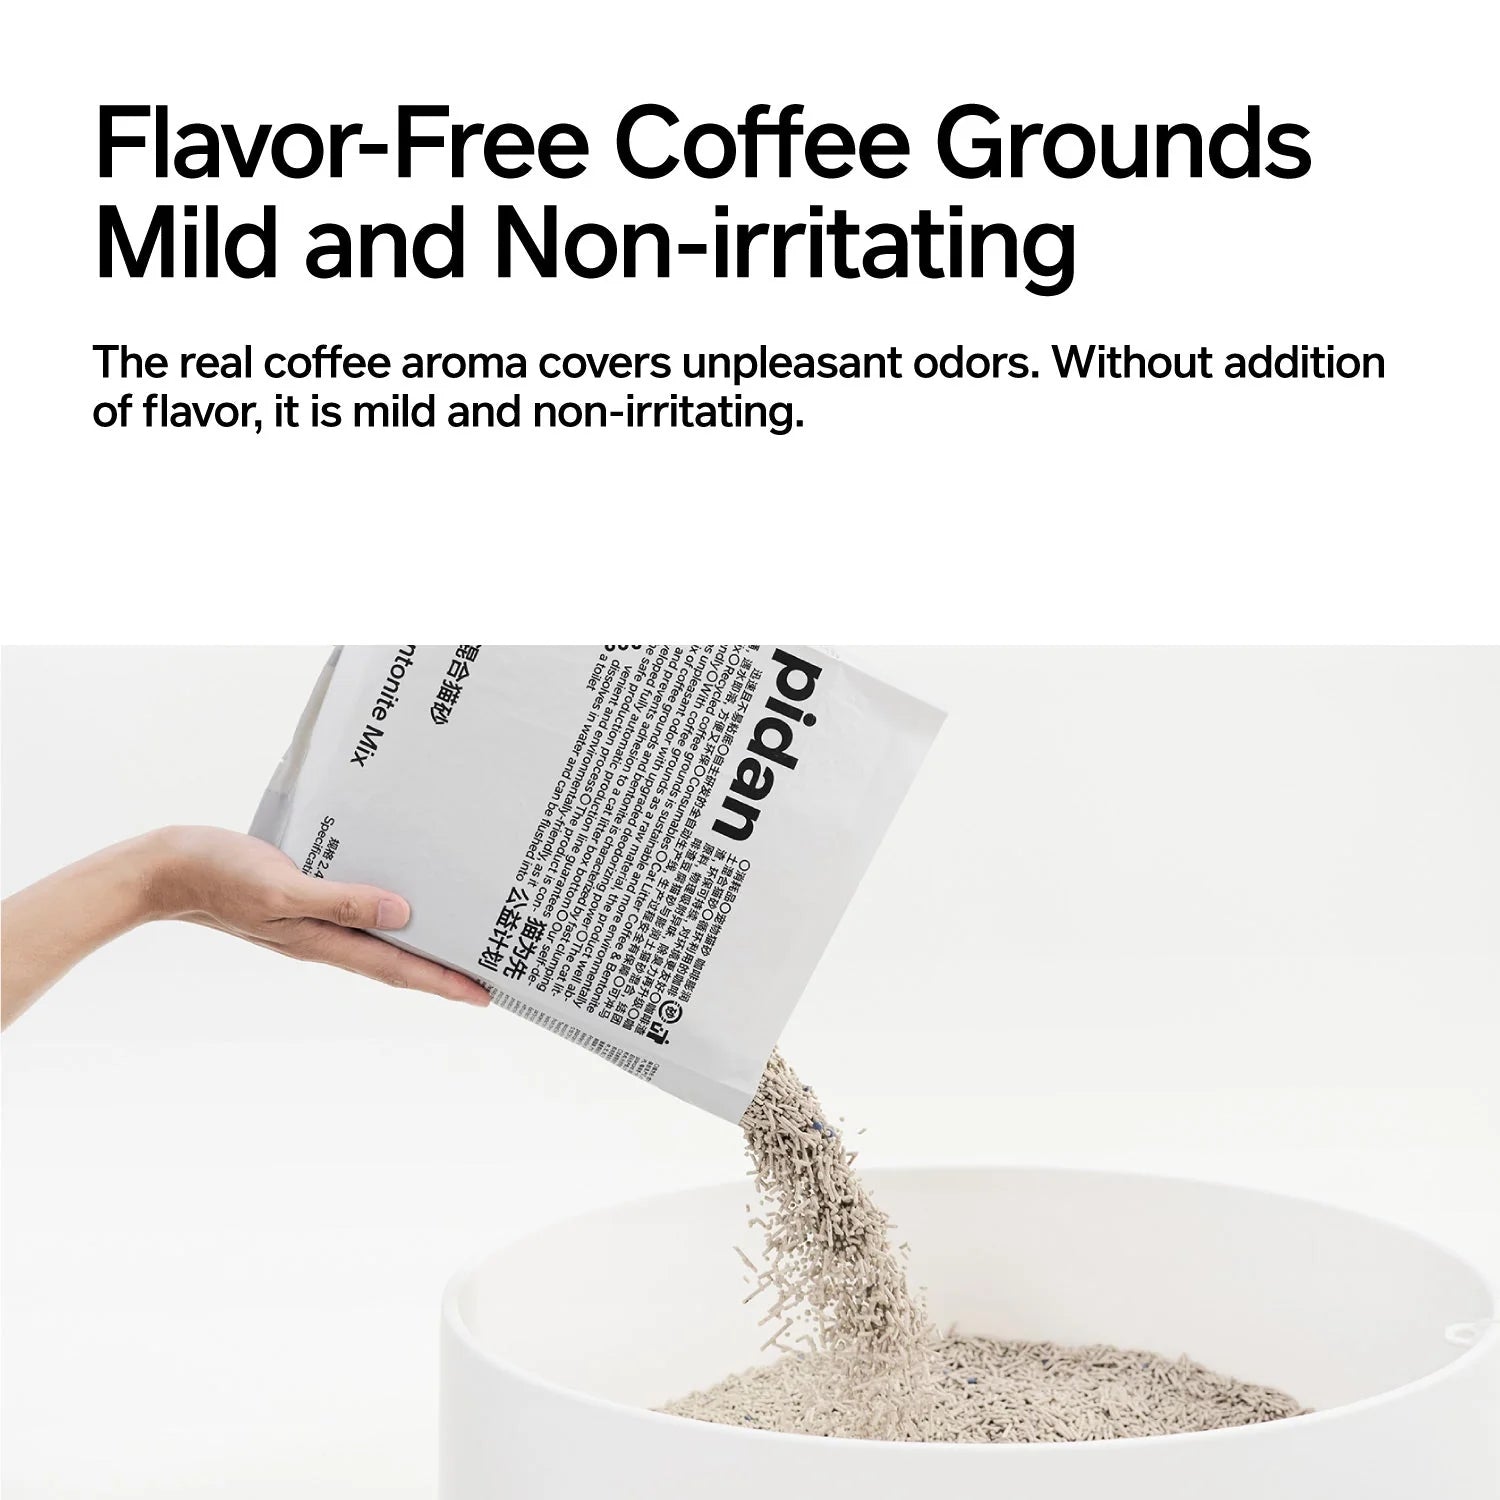 pidan - NEW! Coffee & Bentonite Mix Tofu Cat Litter